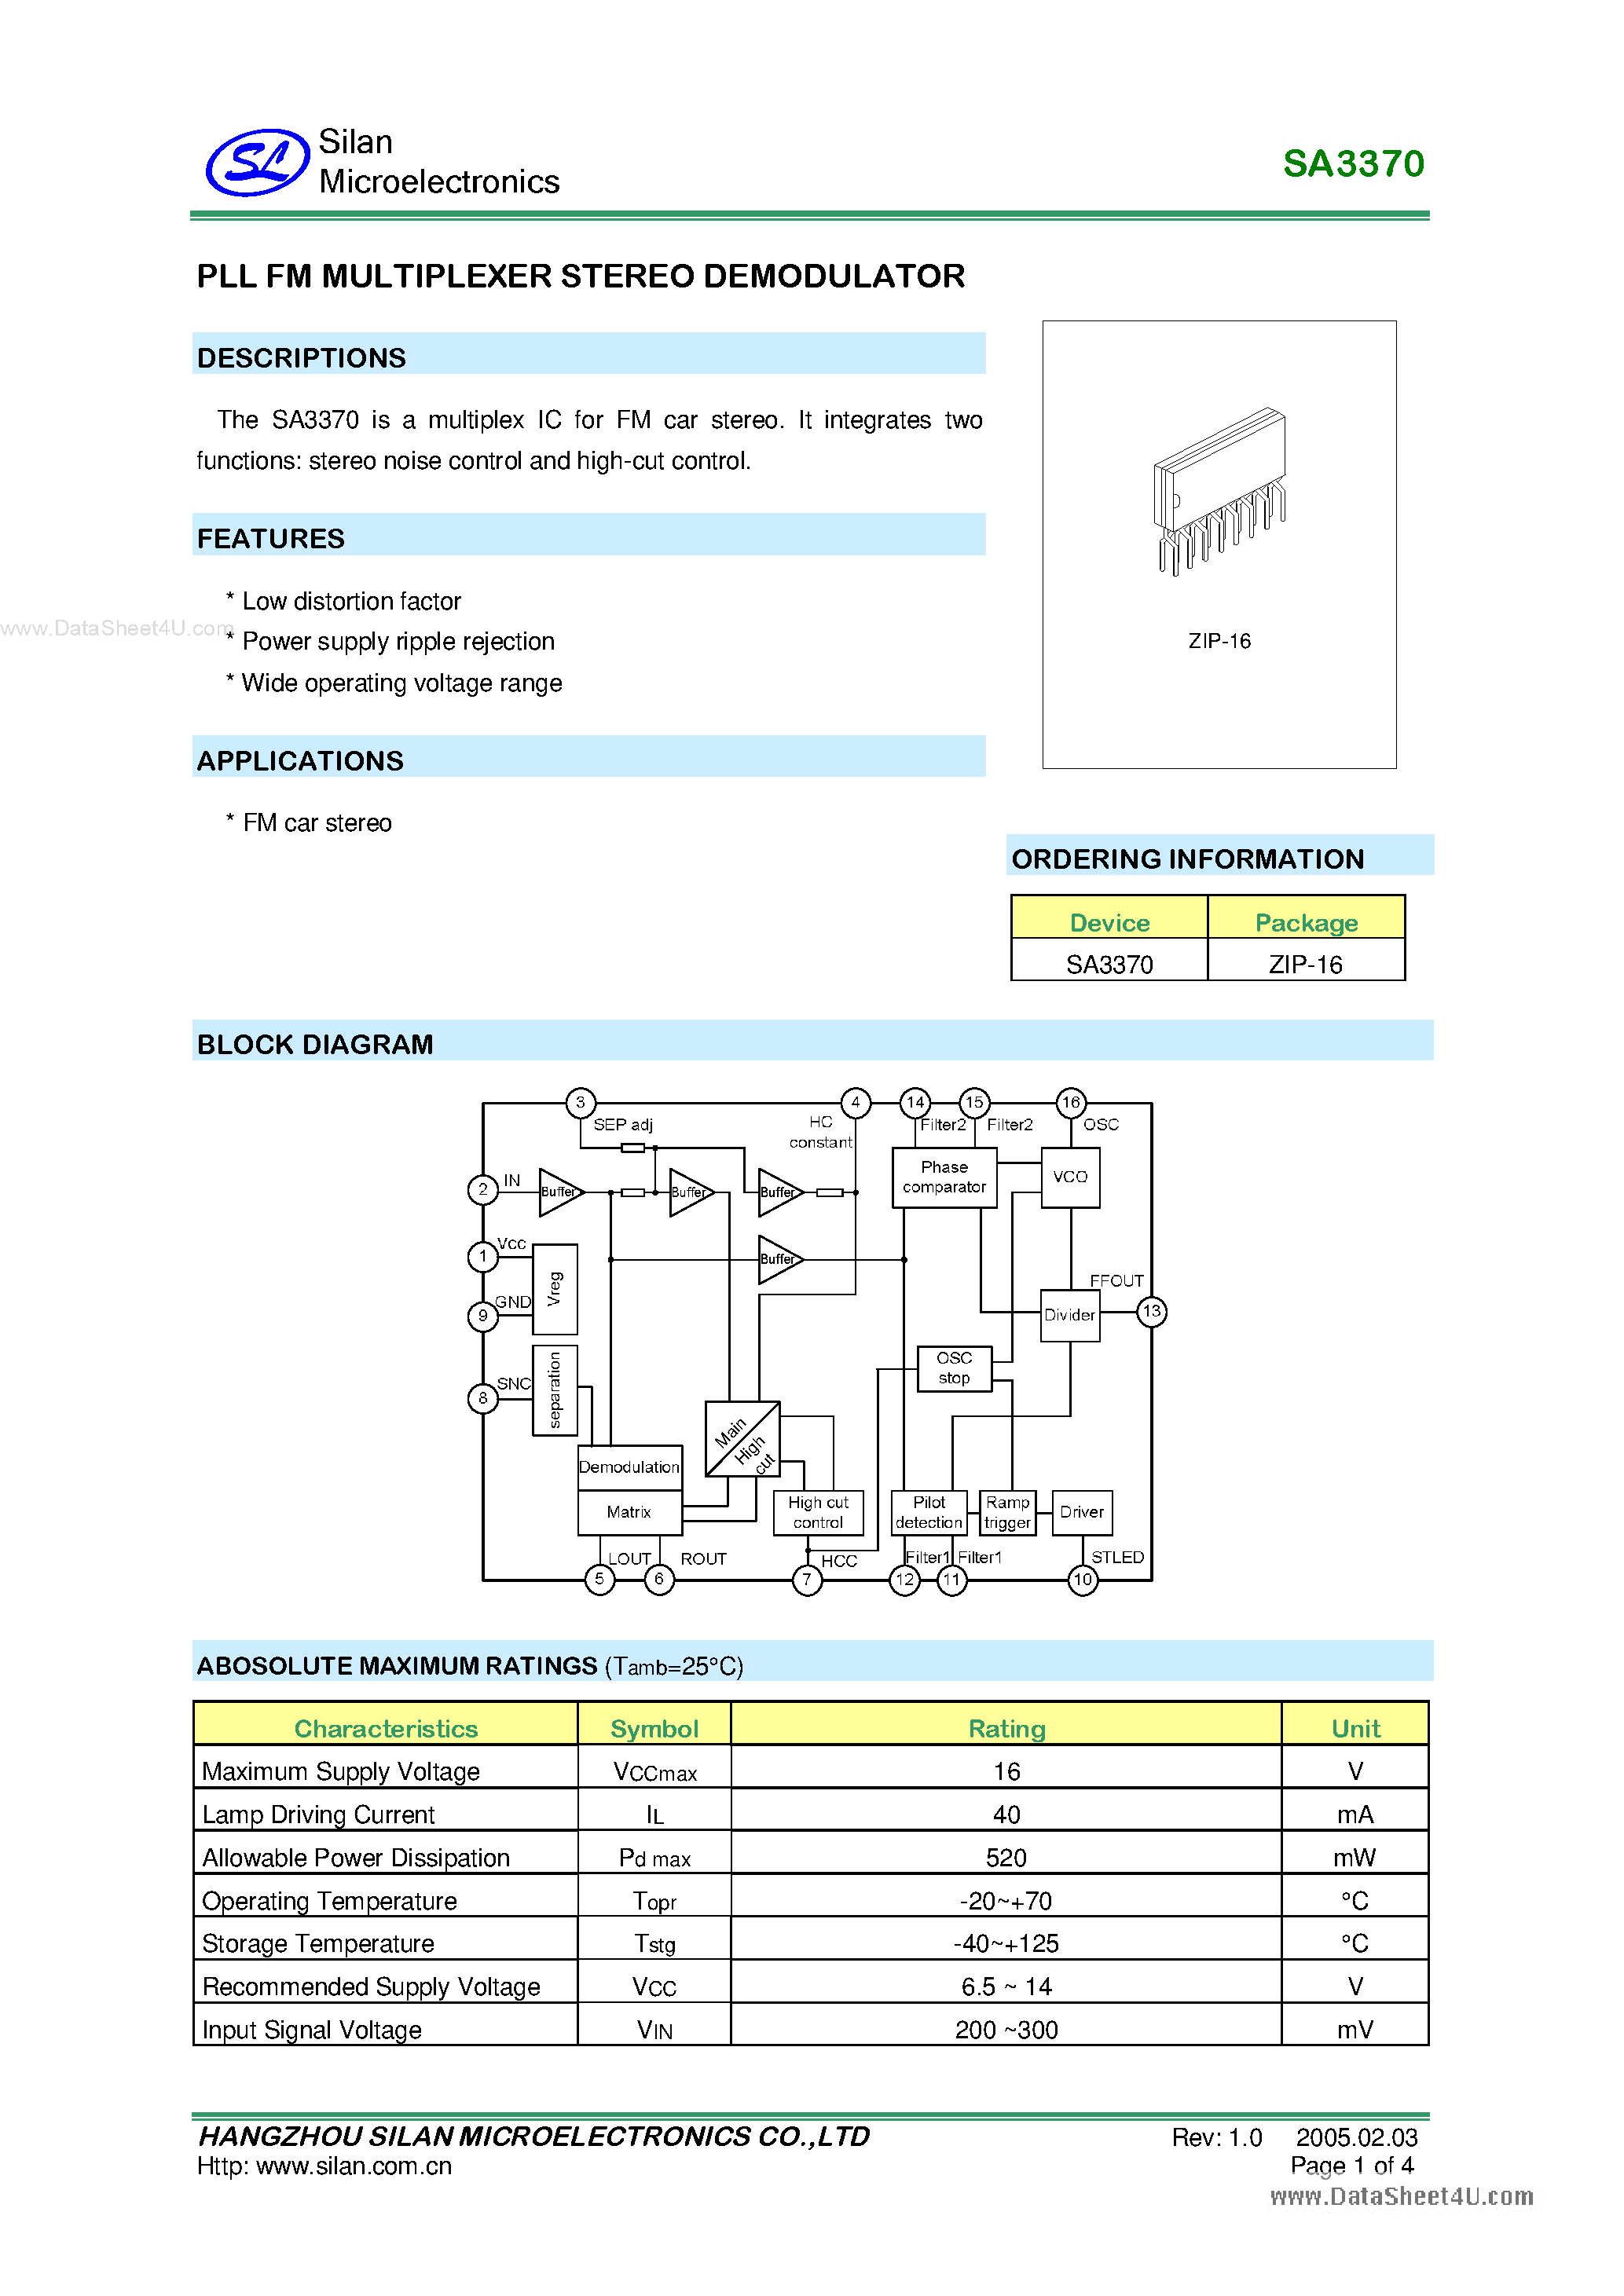 Datasheet SA3370 - PLL FM Multiplexer Stereo Demodulator page 1